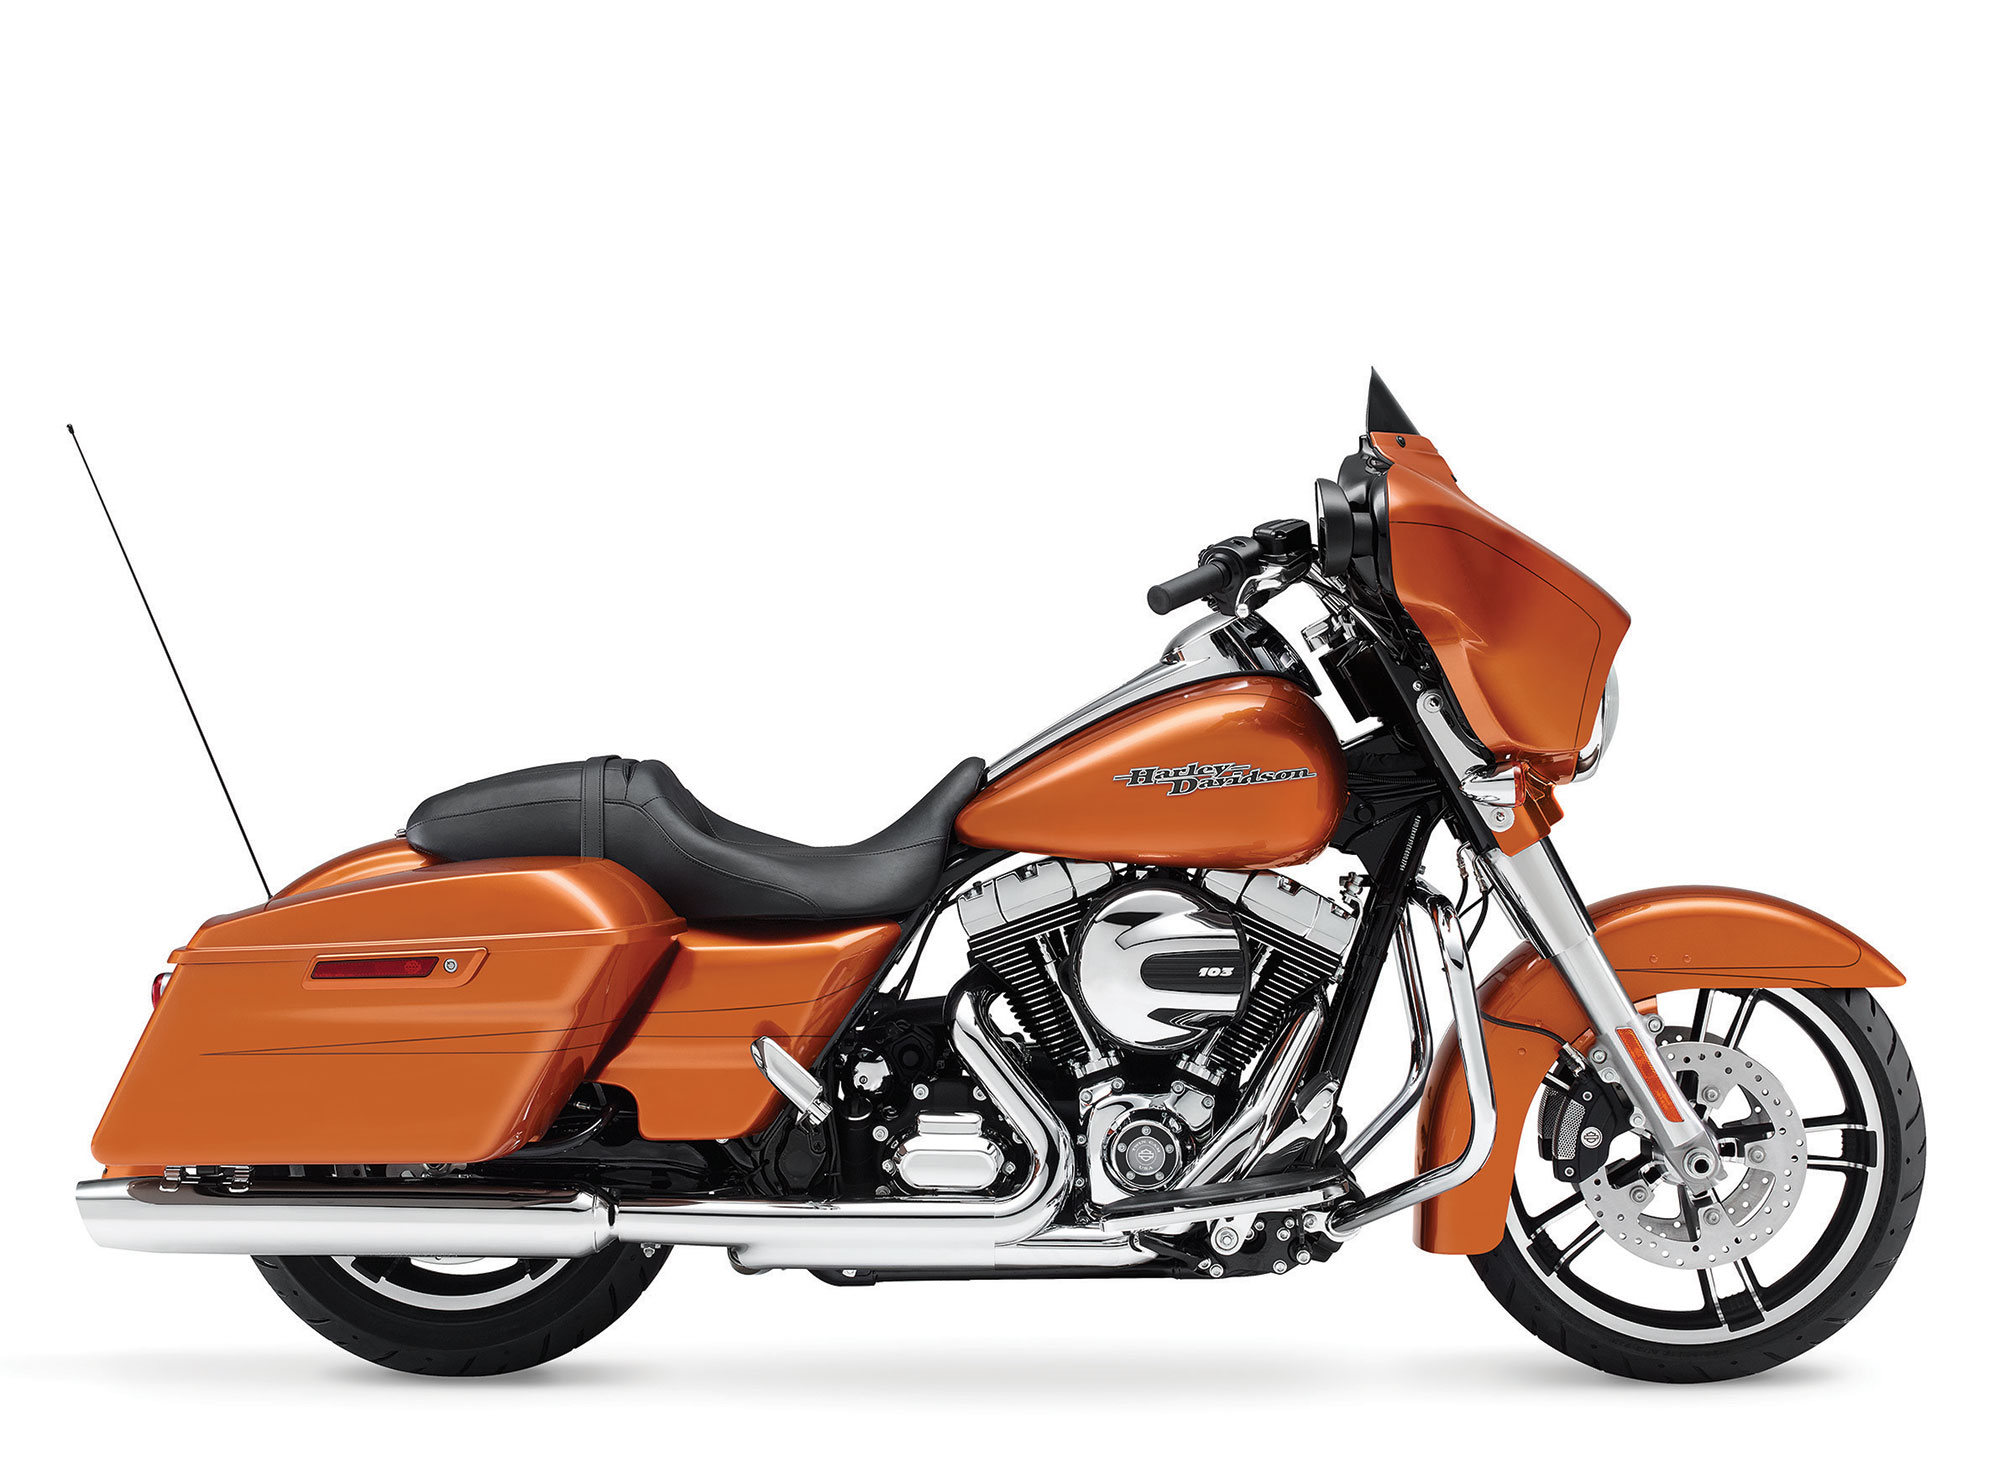 2015 Harley Davidson Flhxs Street Glide Special Review